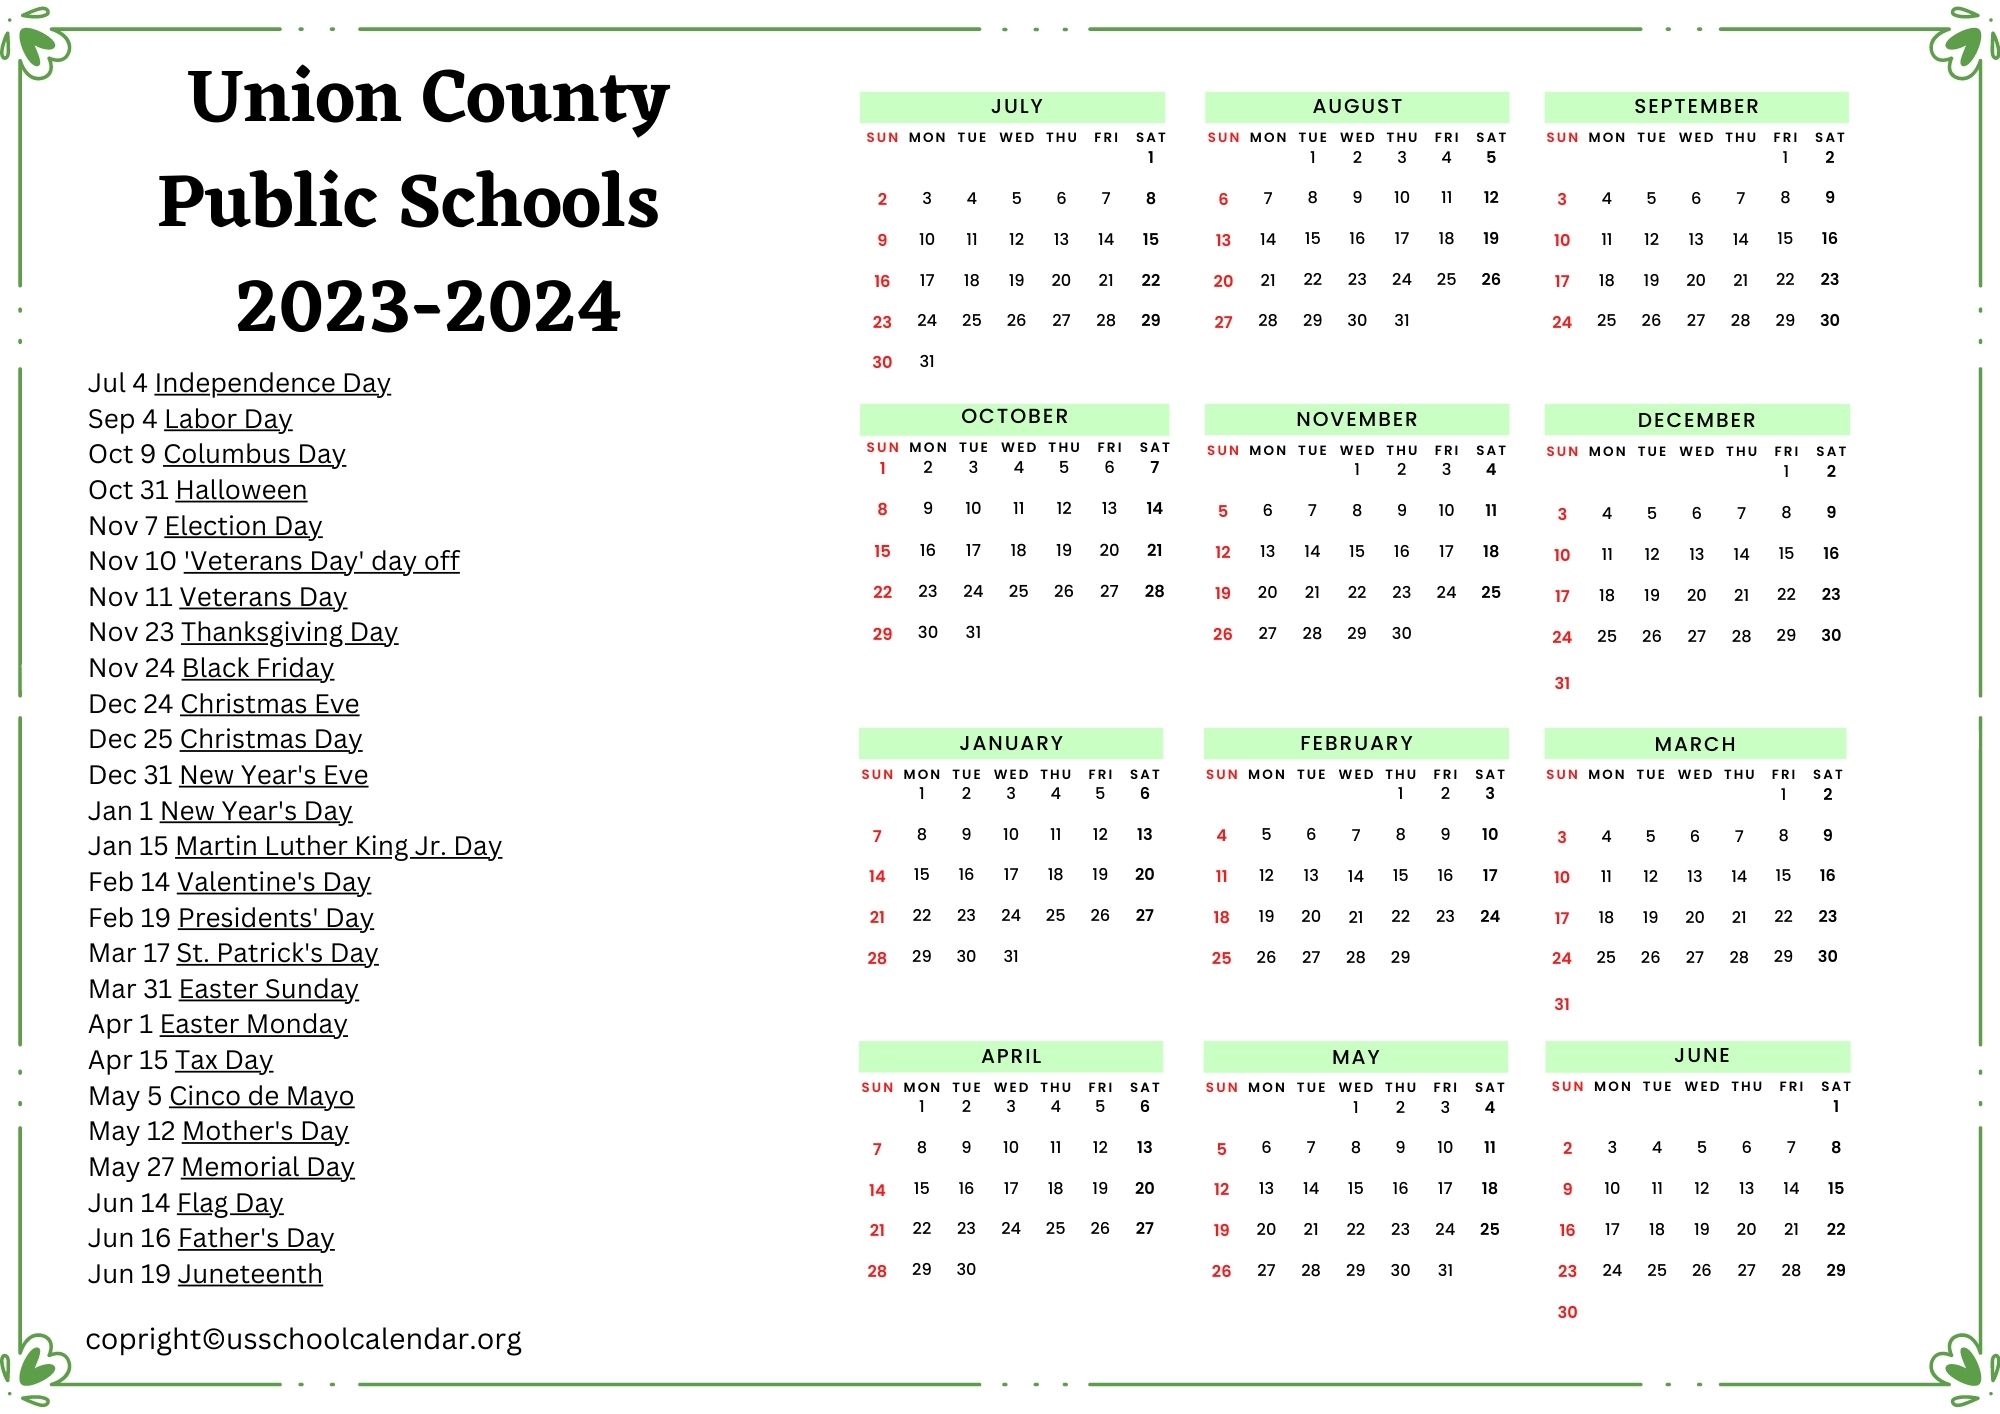 Union County Public Schools Calendar with Holidays 2023 2024